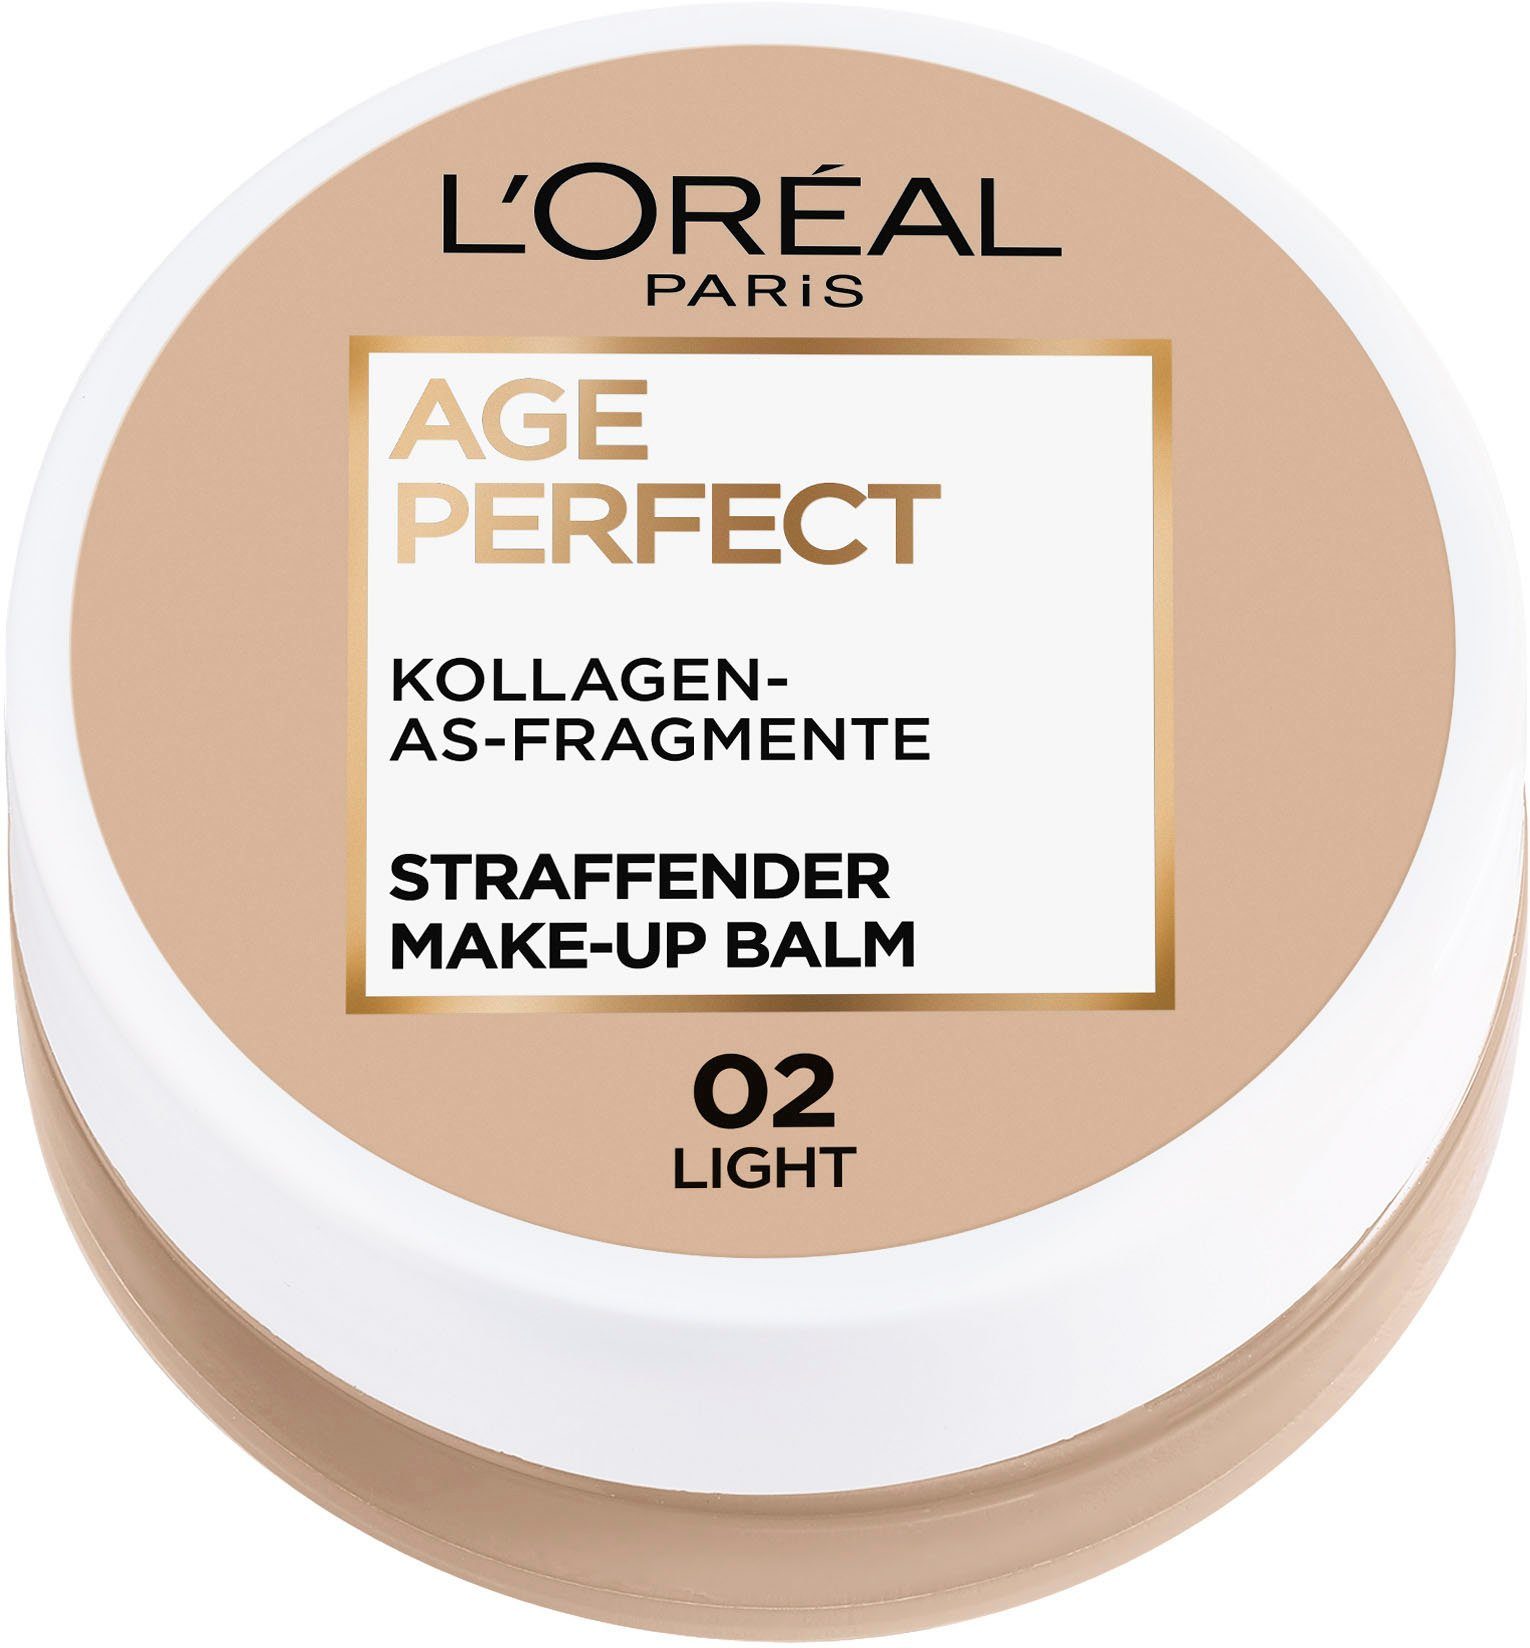 L'ORÉAL PARIS 02 Light Make-up Make-up Balm Perfect Age Foundation Perfect Age Balm